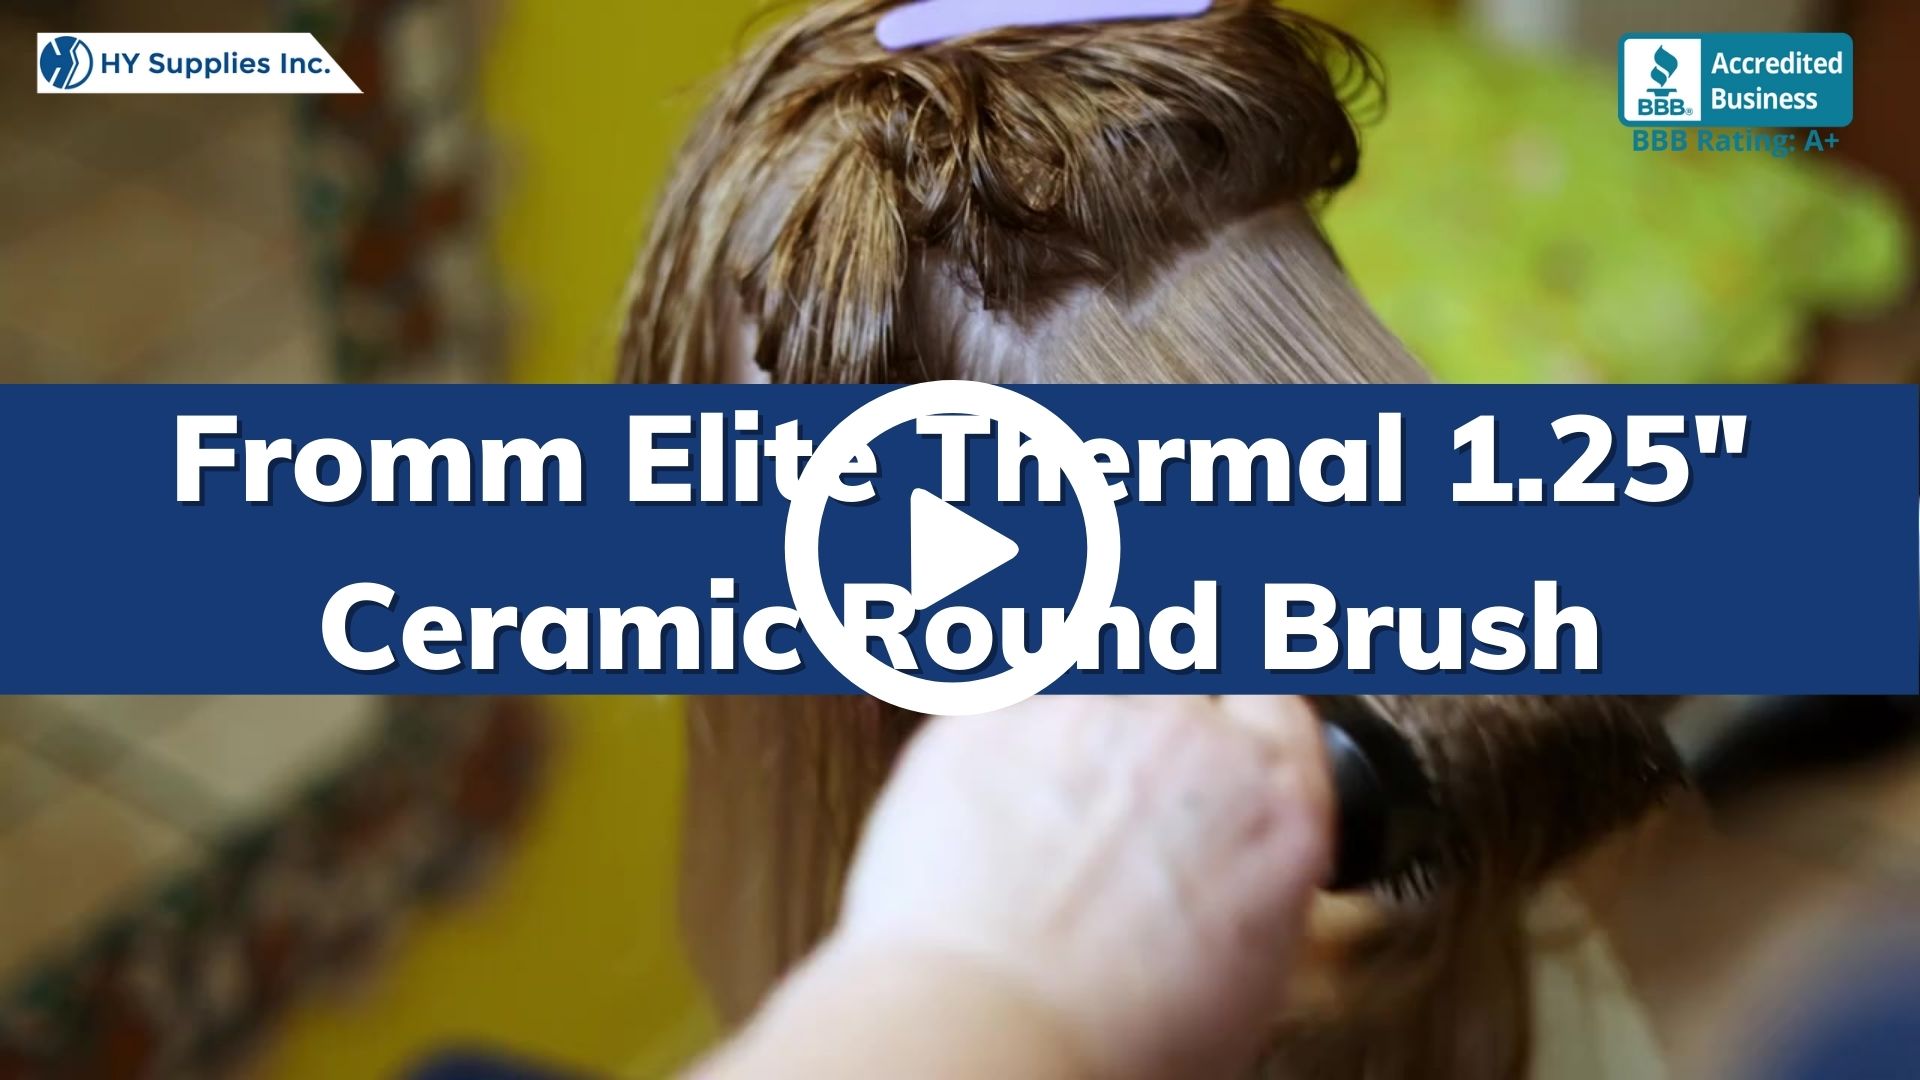 Fromm Elite Thermal 1.25"" Ceramic Round Brush